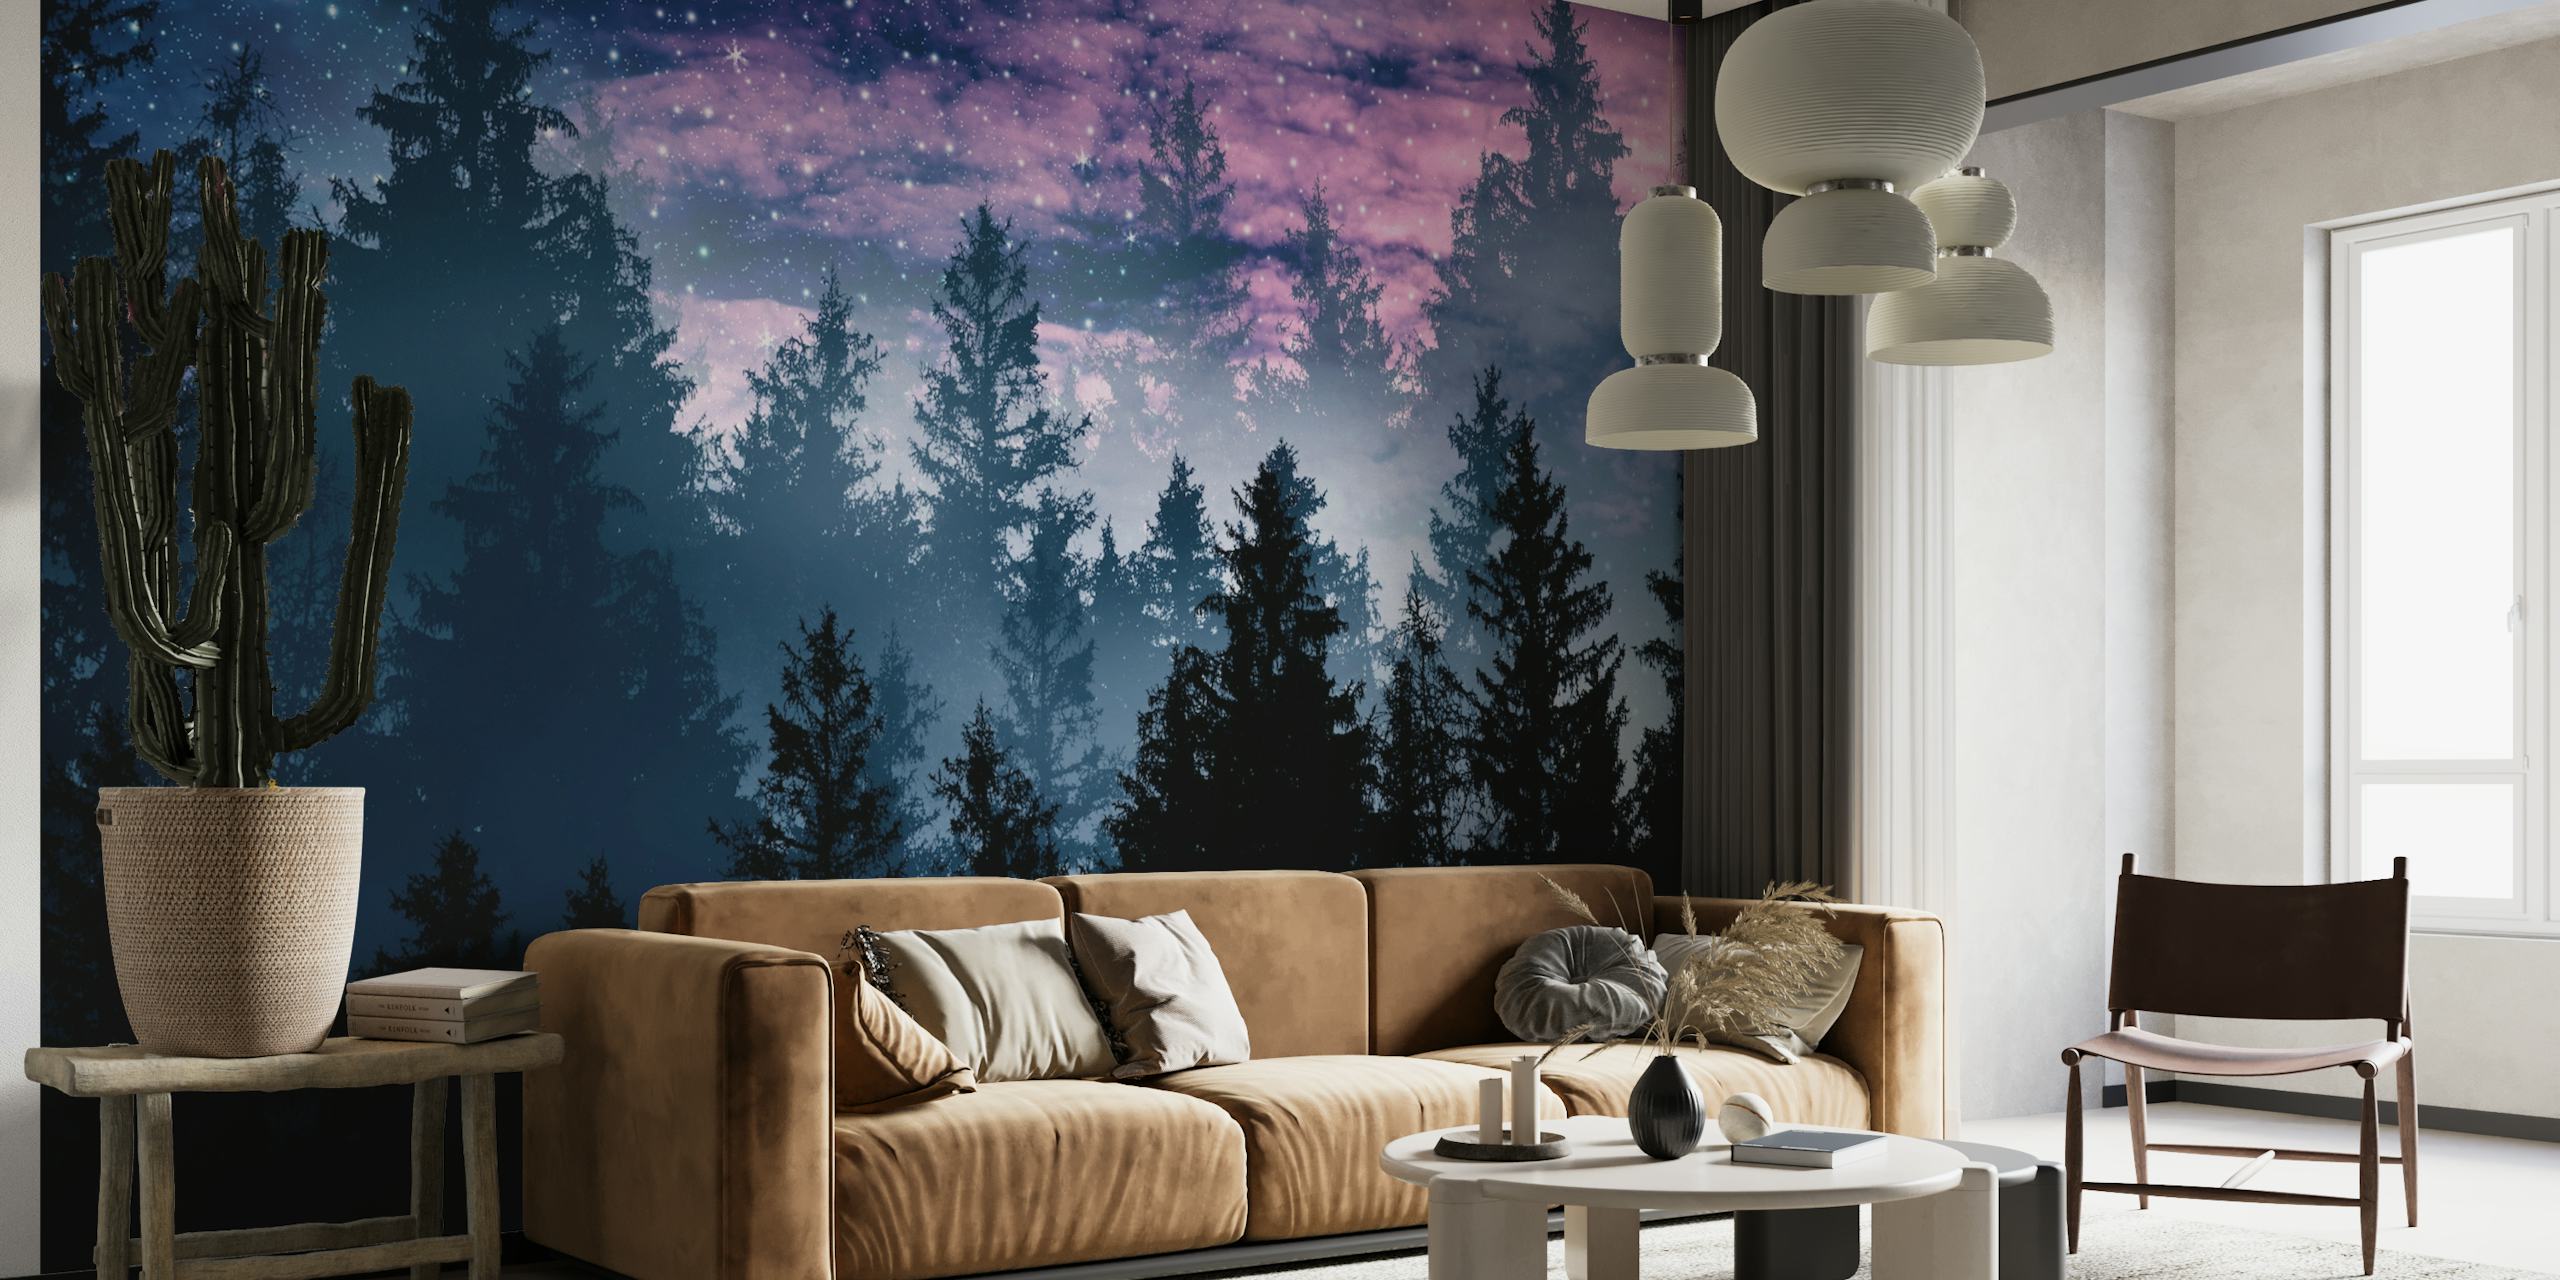 Forest Galaxy Dream 1 wallpaper